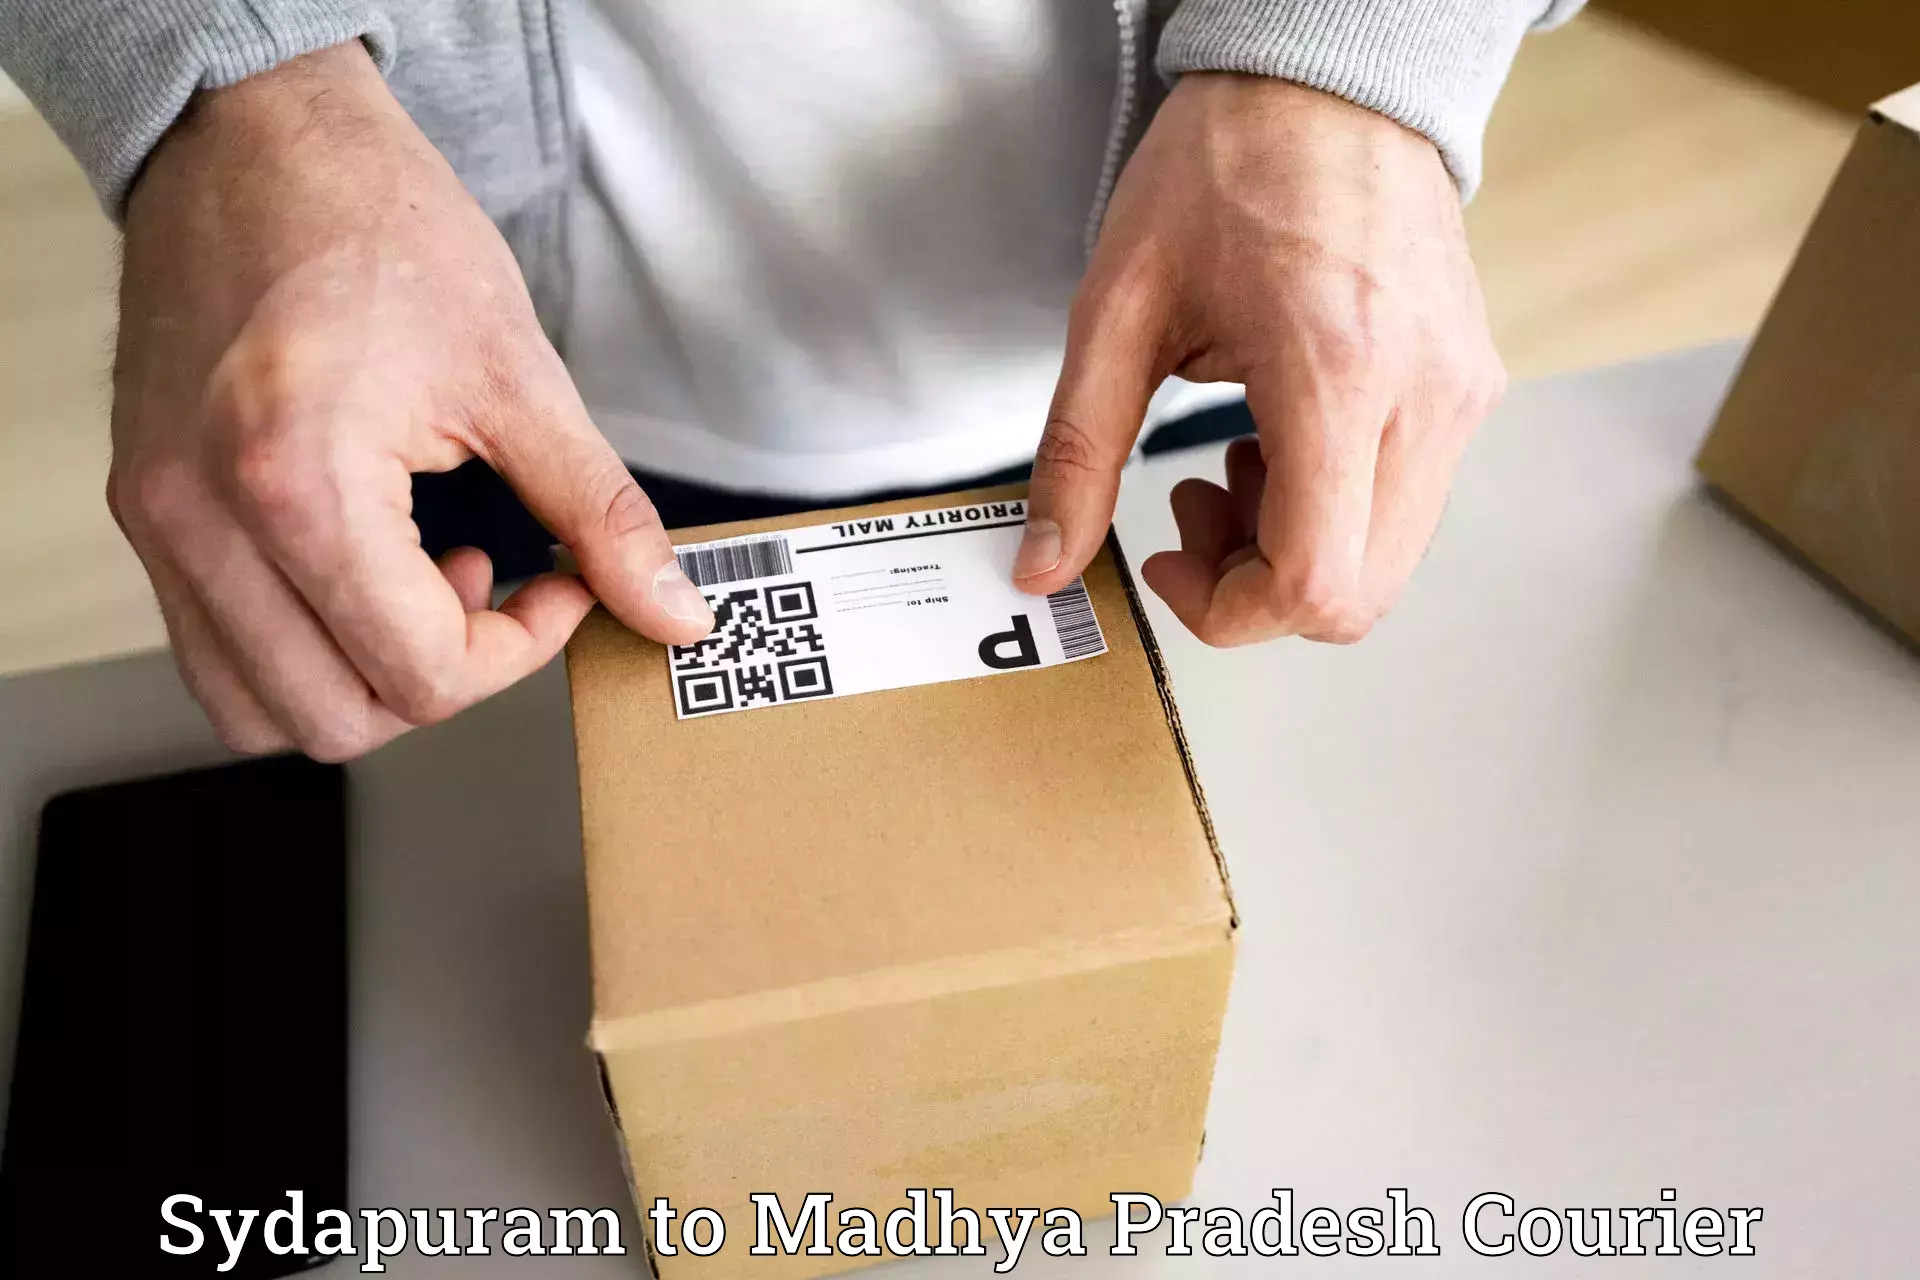 State-of-the-art courier technology Sydapuram to Karera